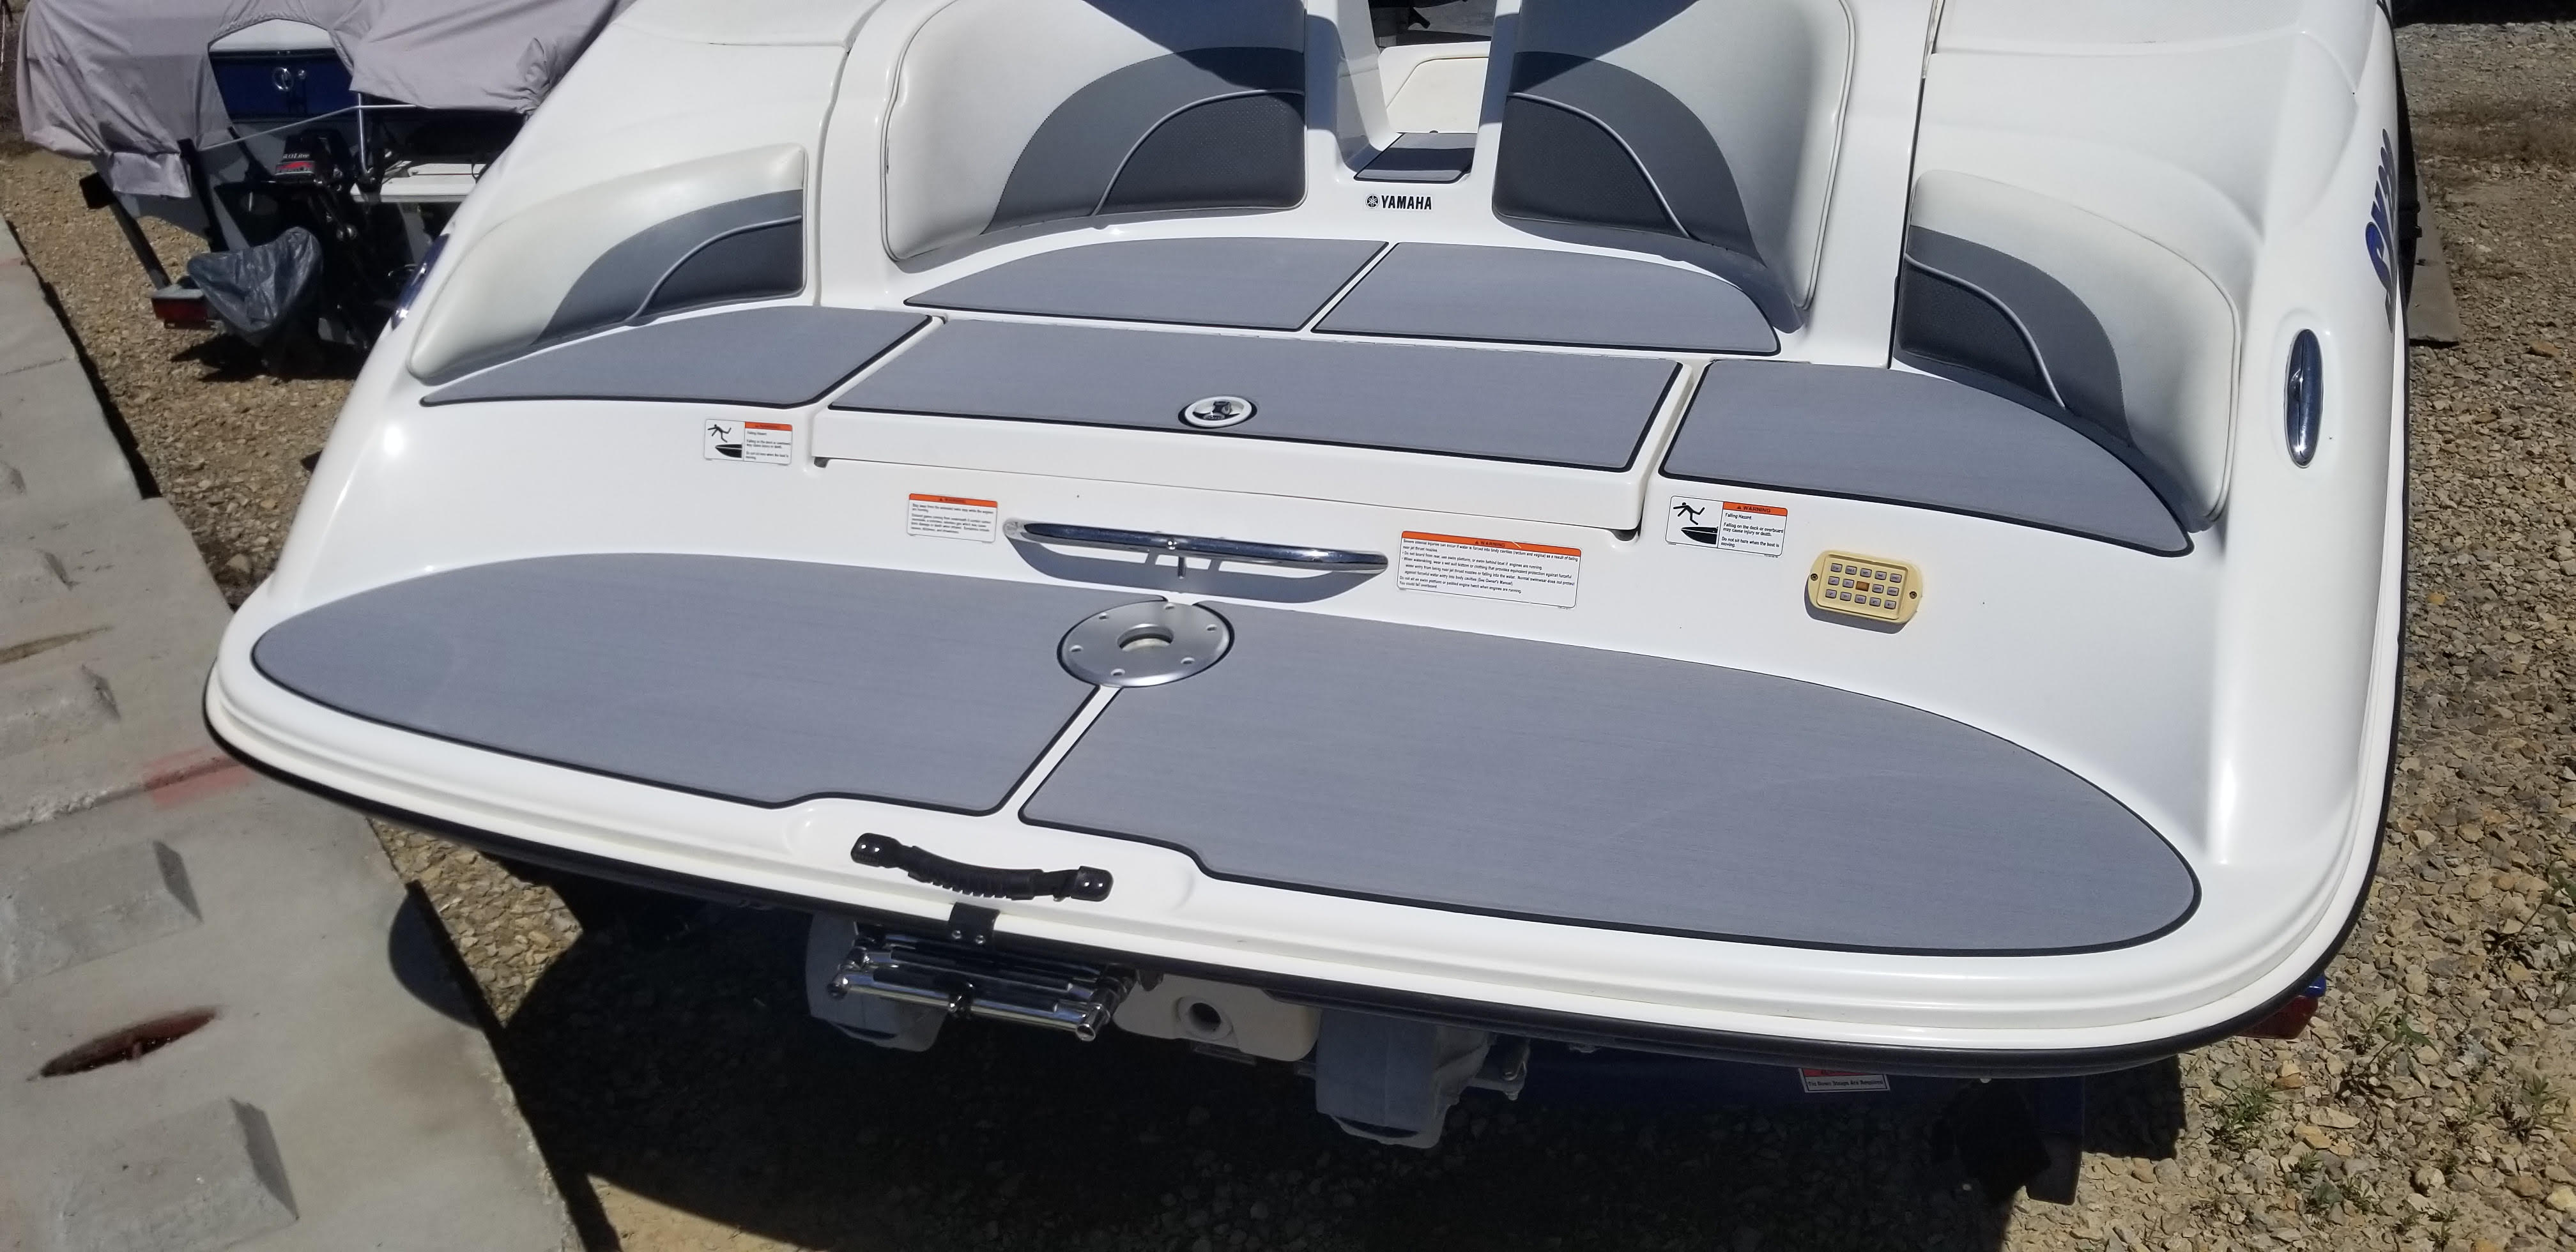 Yamaha Boats with SeaDek SX230